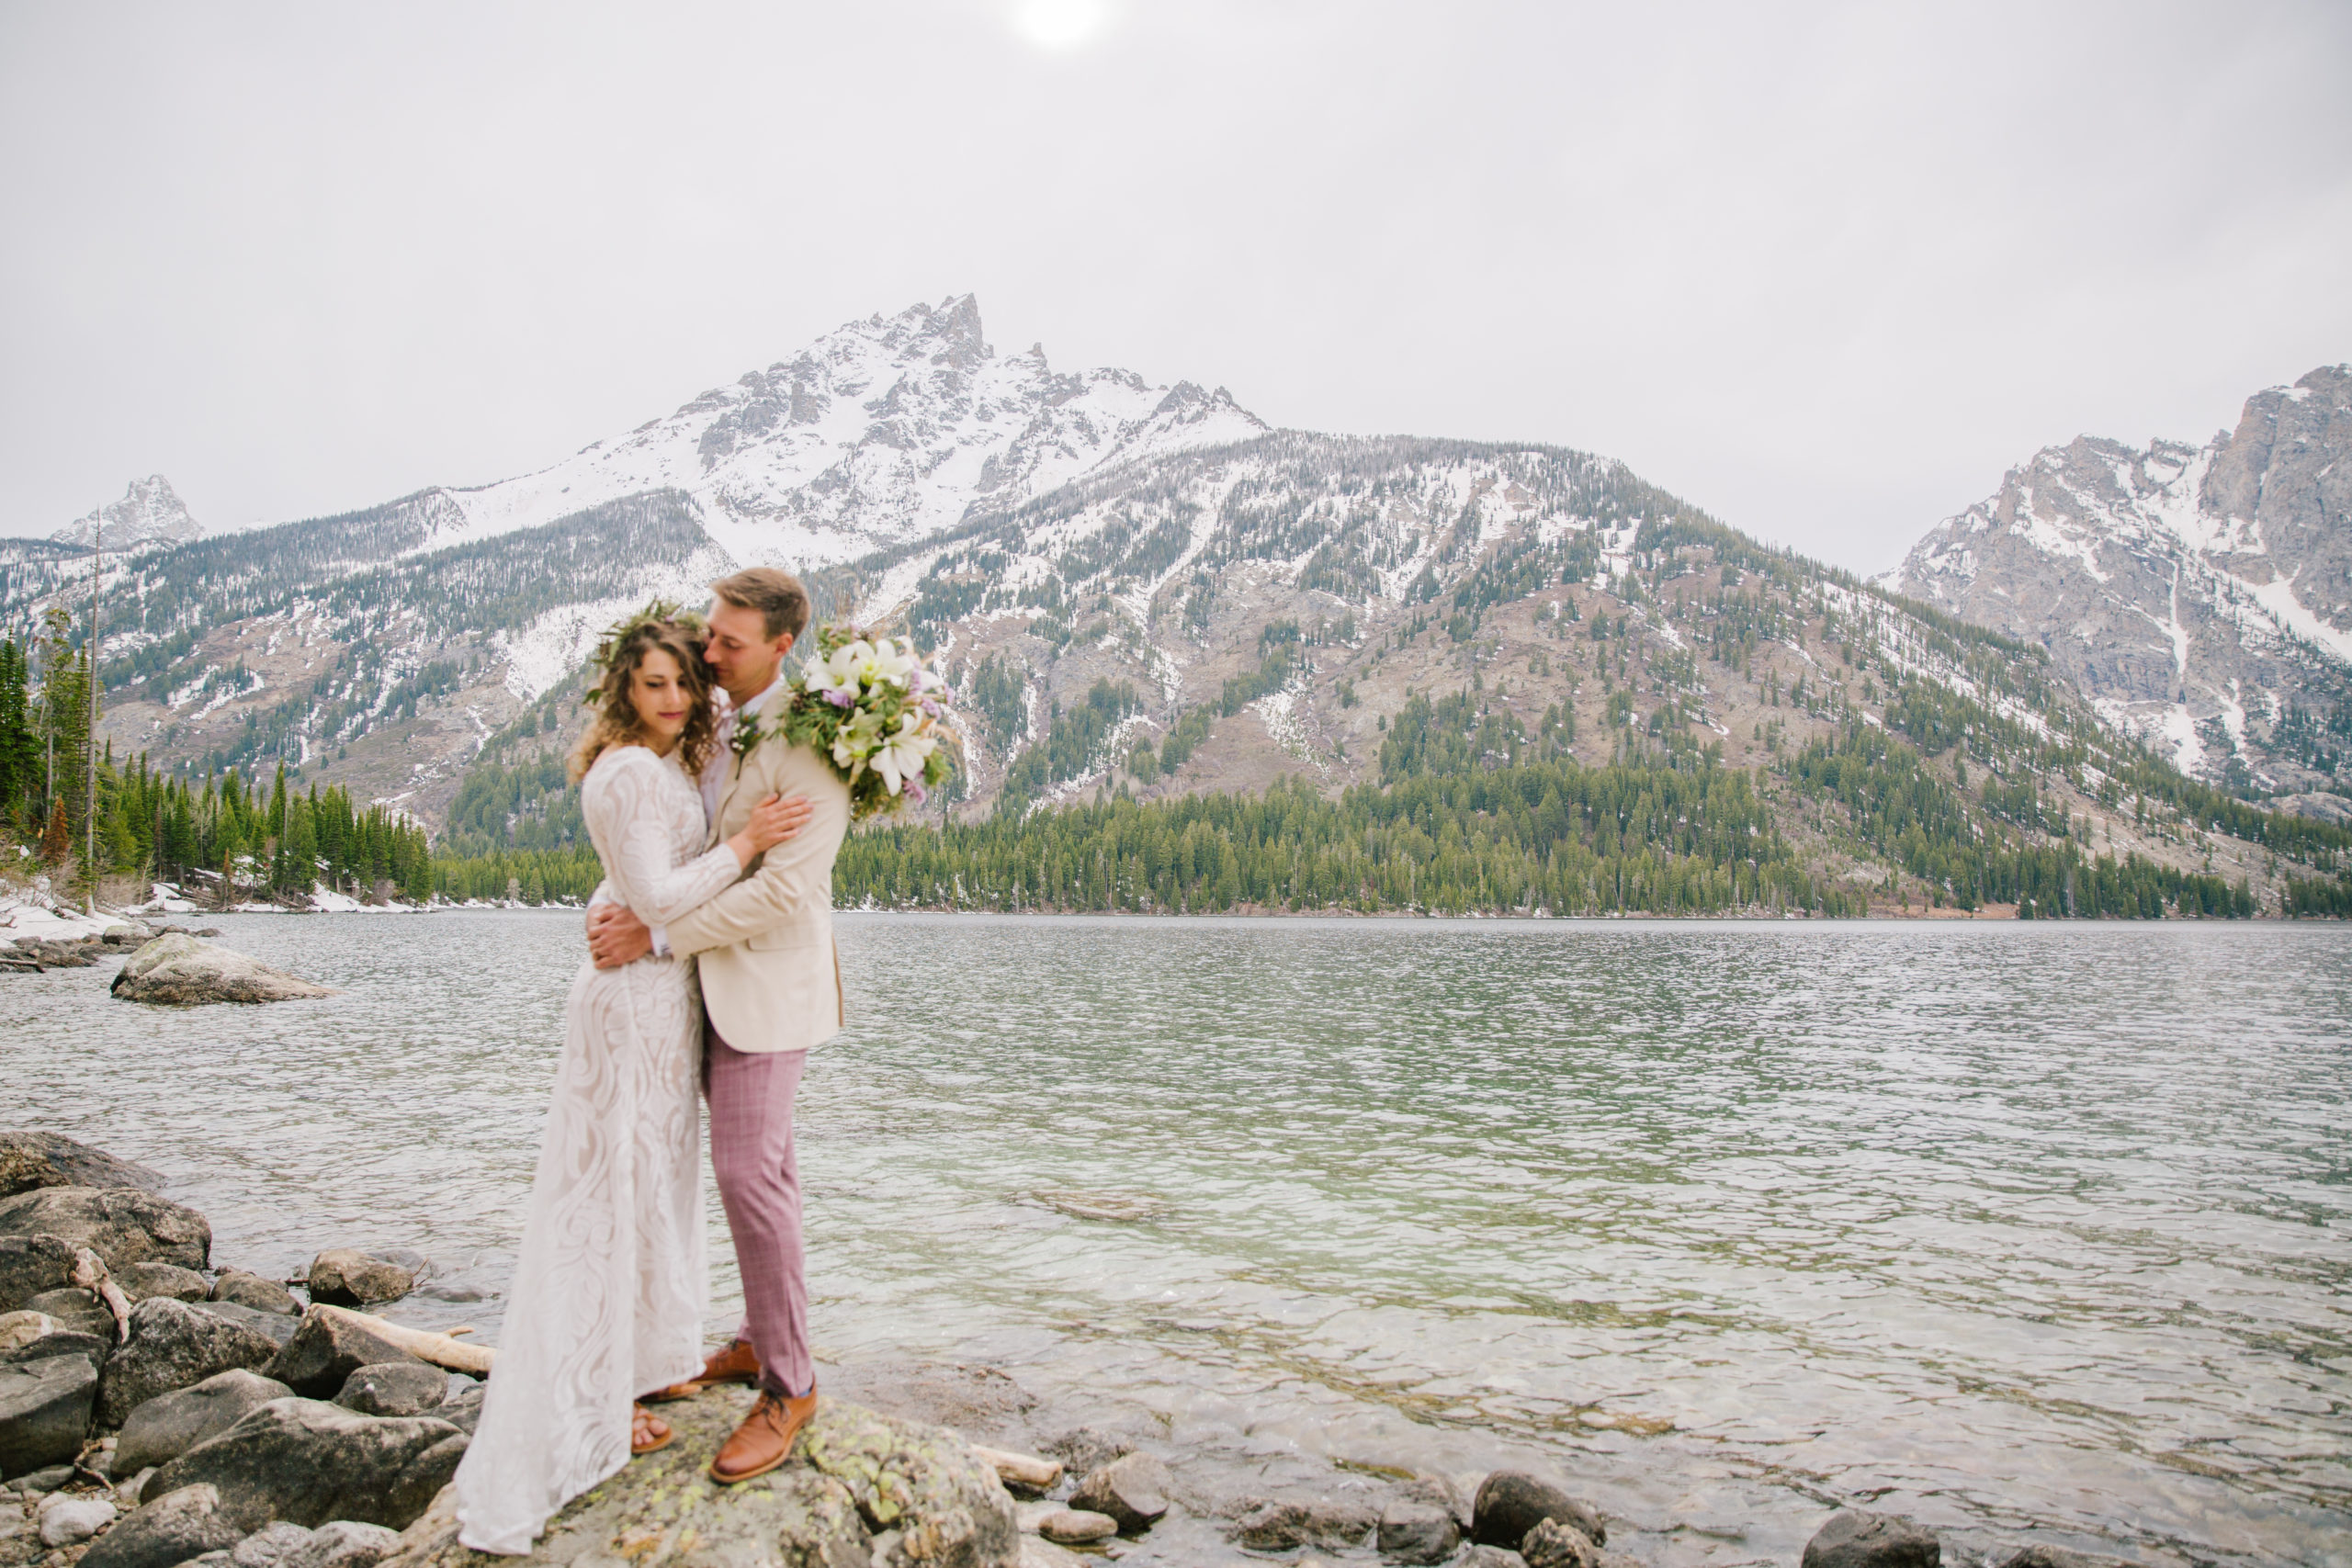 Jackson Hole elopement photographer captures couple embracing at Jenny Lake during bridal portraits